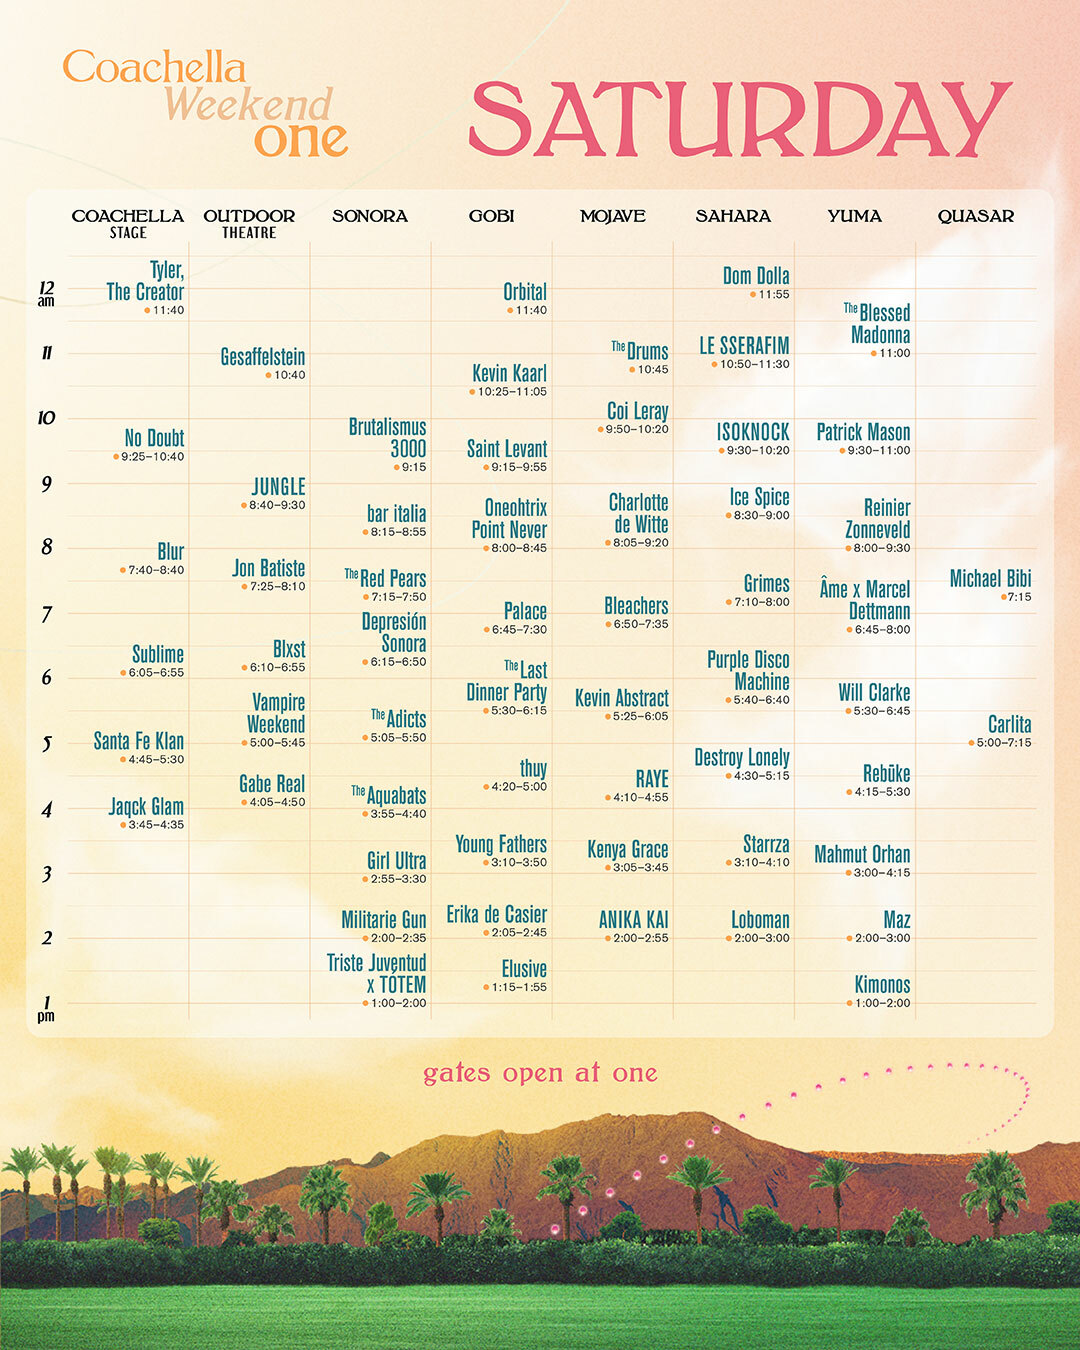 Coachella weekend one Saturday schedule